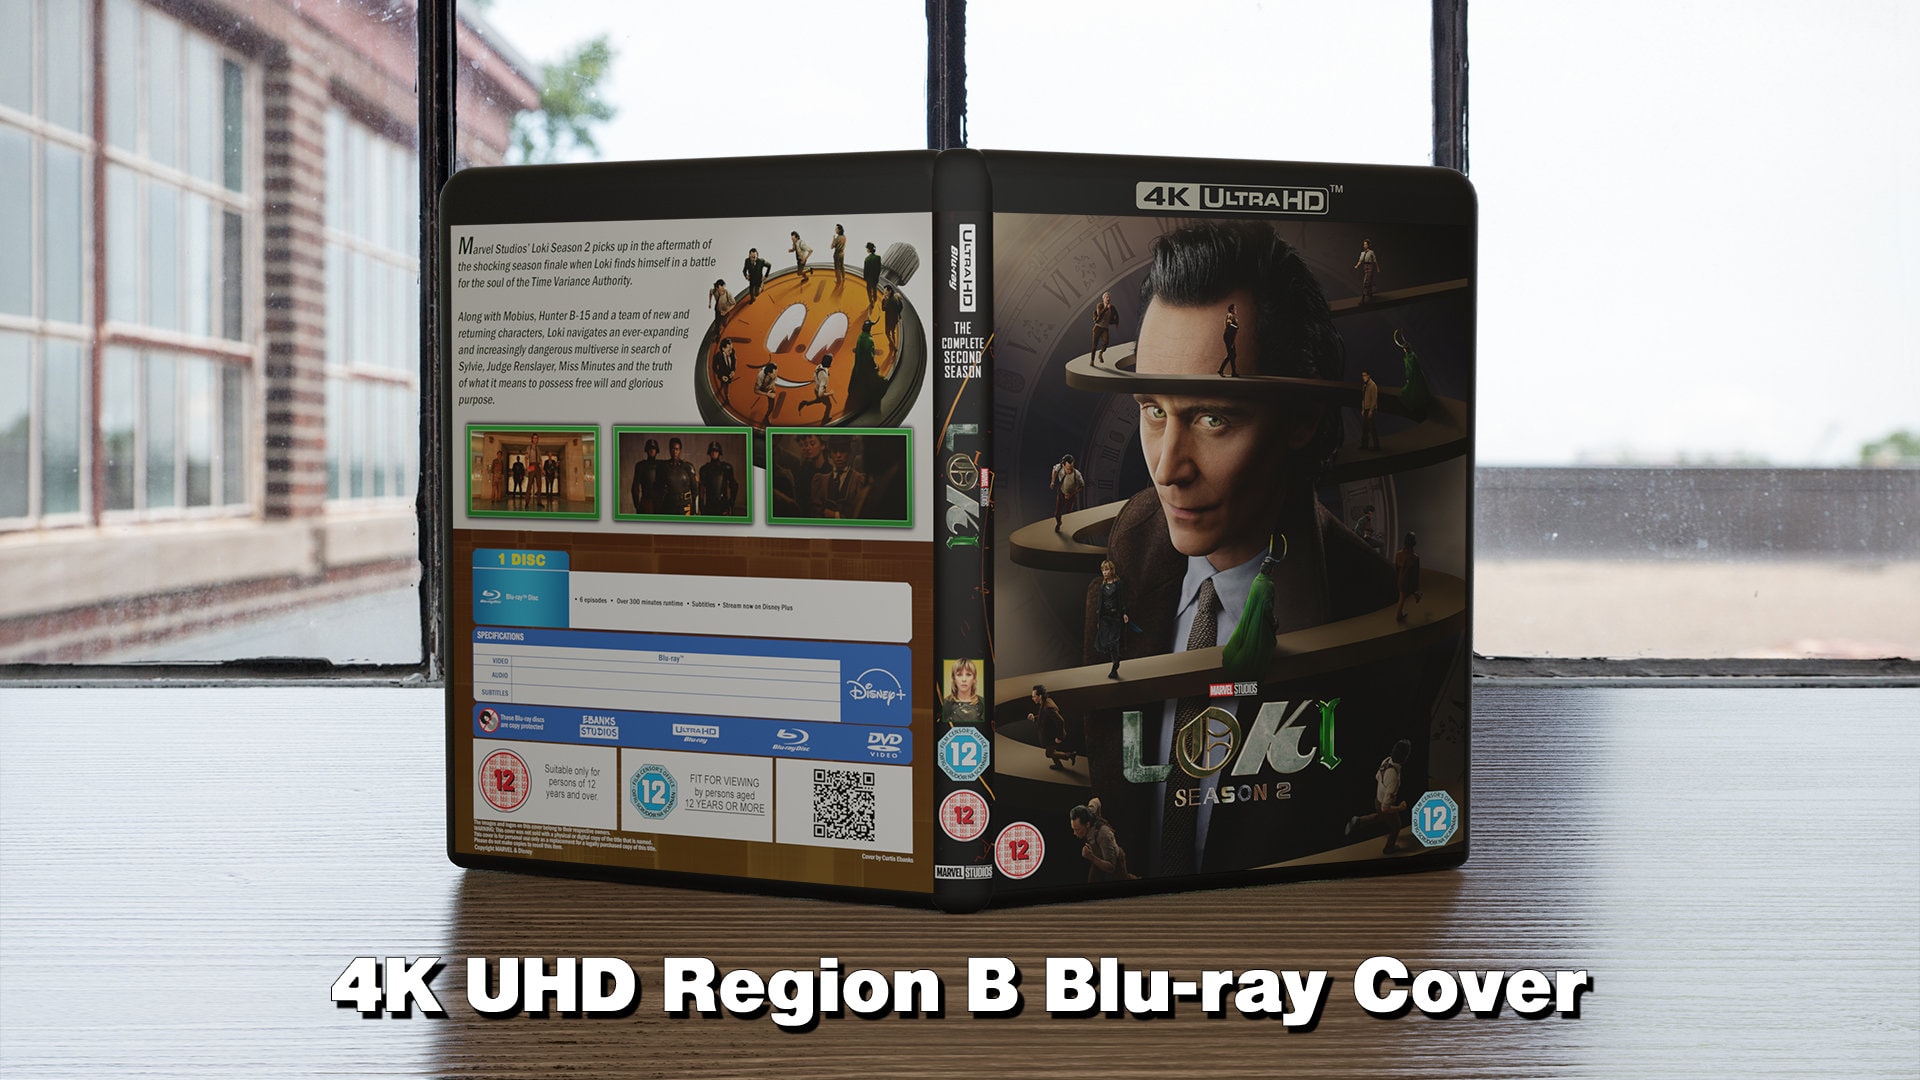 Loki Season 2 (2023) TV Series 2 Disc All Regin Blu-ray Boxed BD